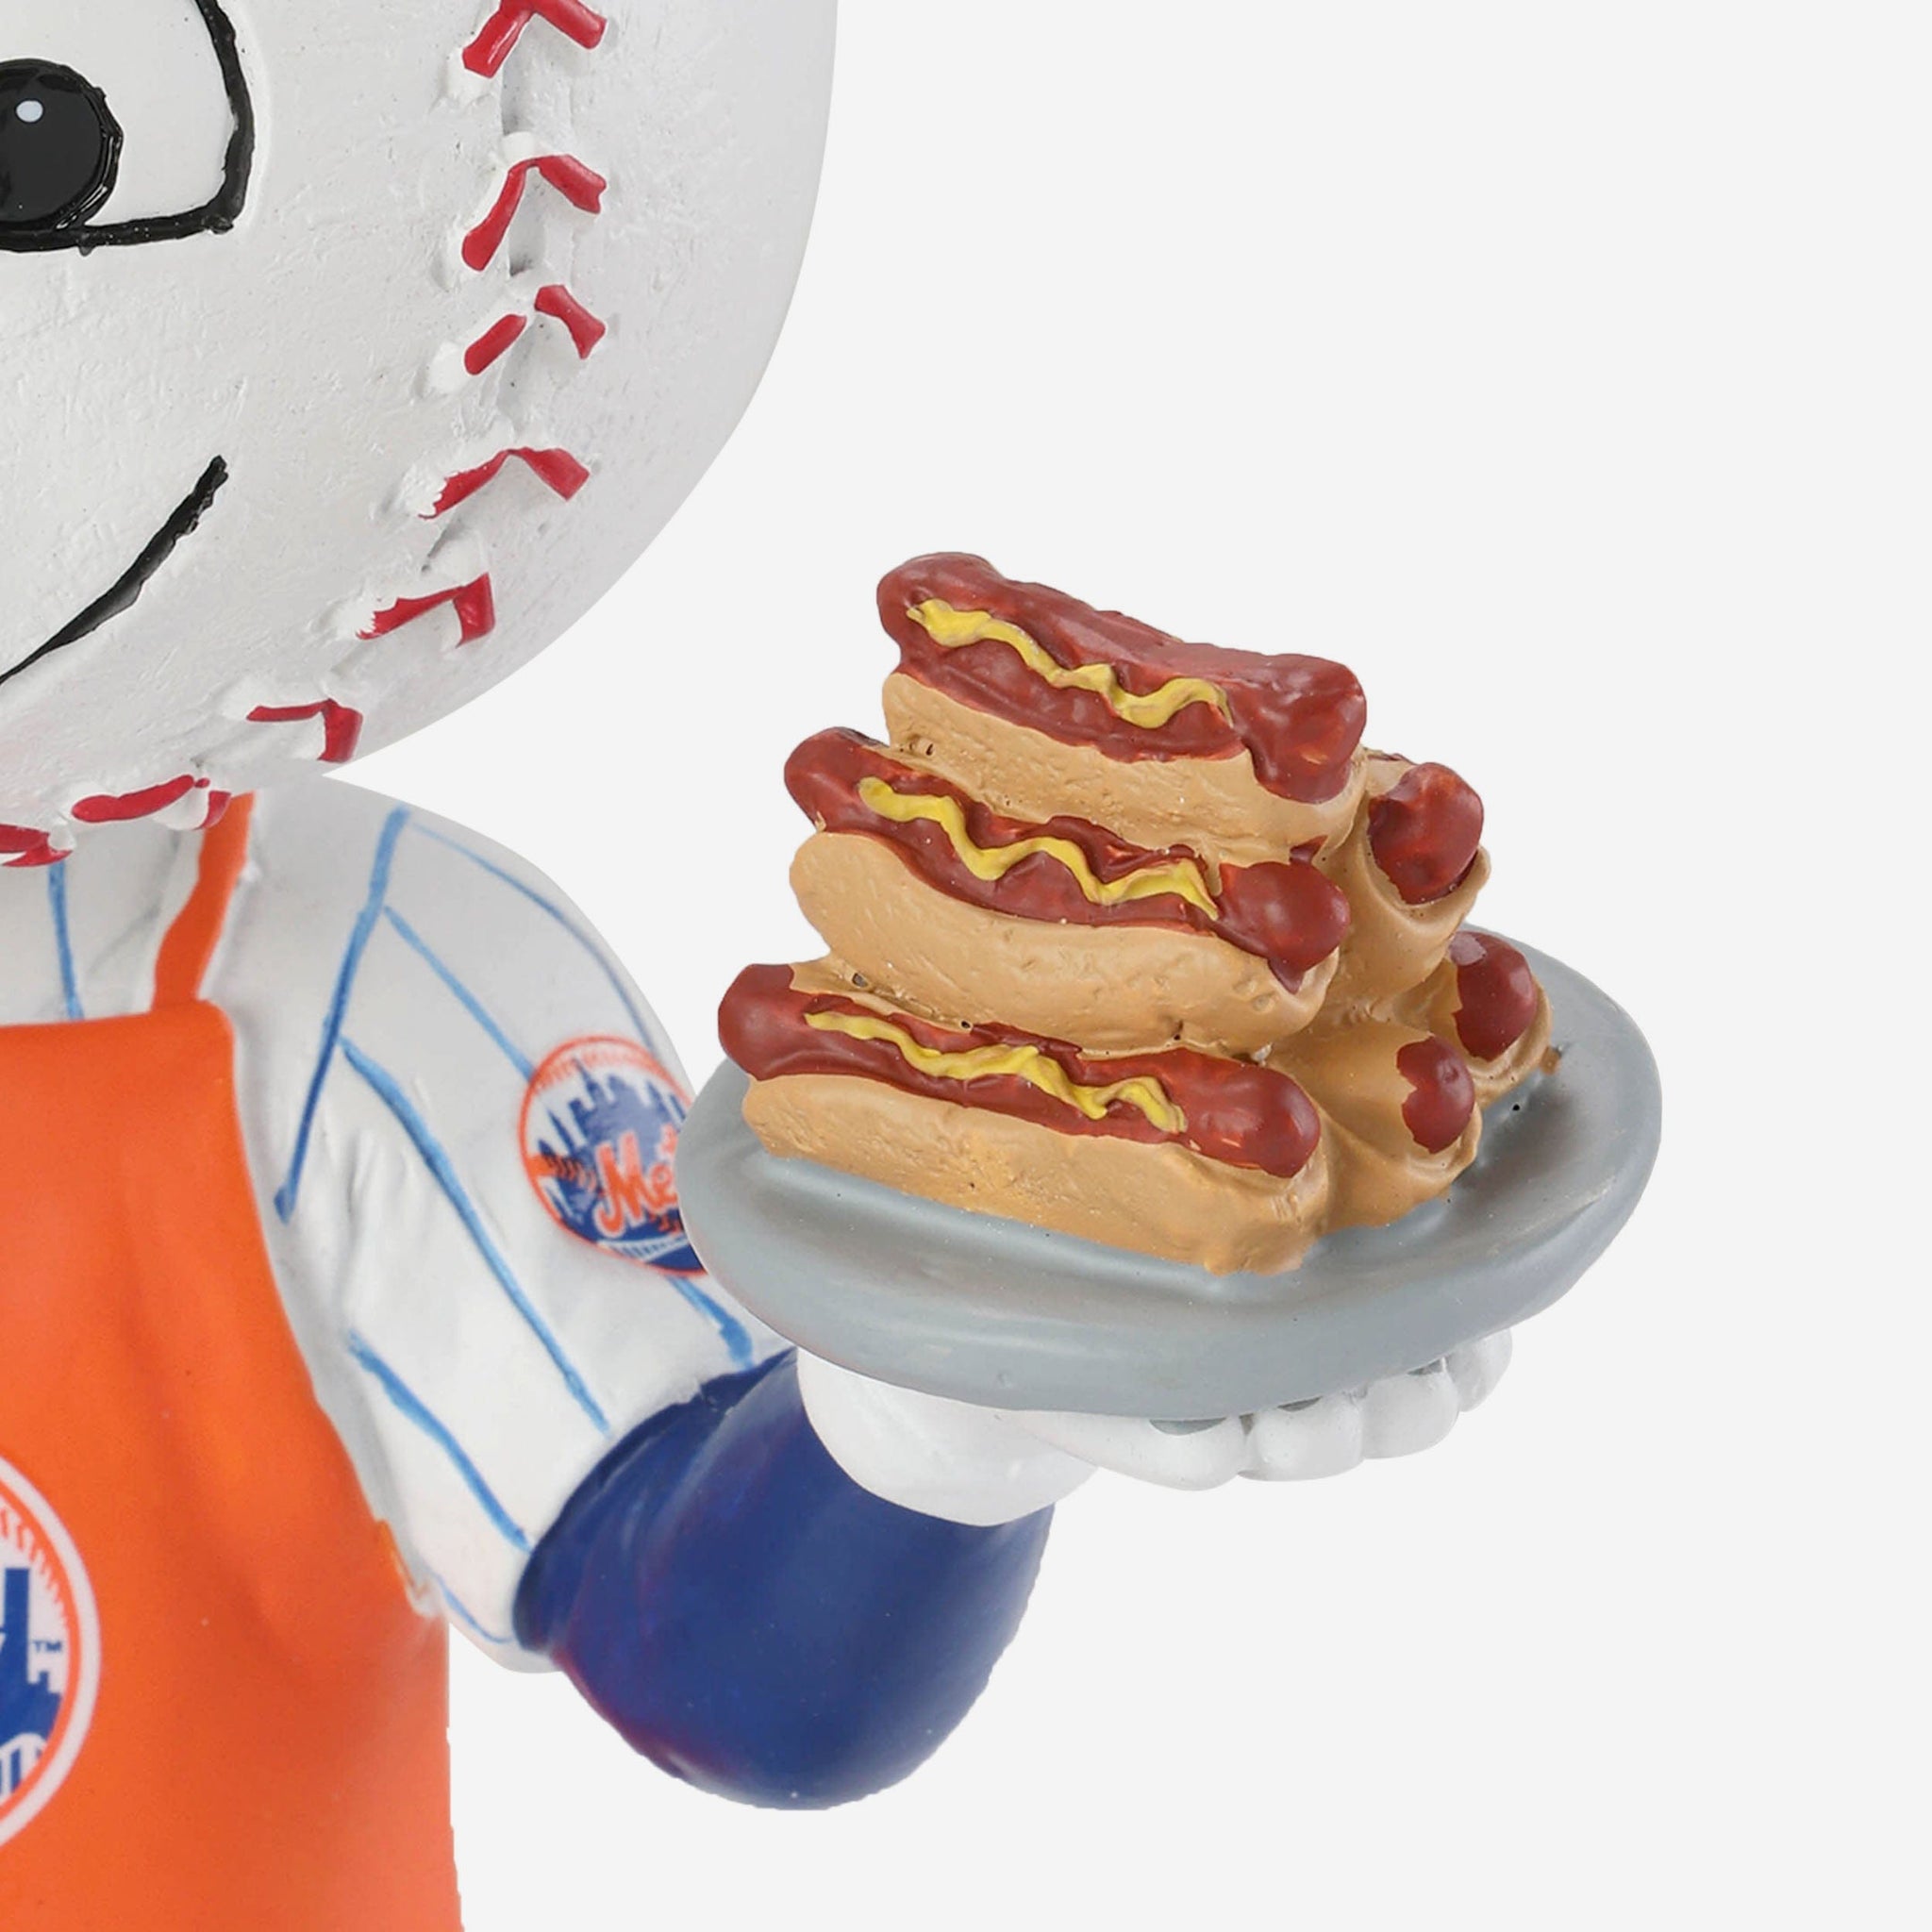 Mr Met New York Mets Mascot Action Pose Light Up Ball Bobblehead FOCO